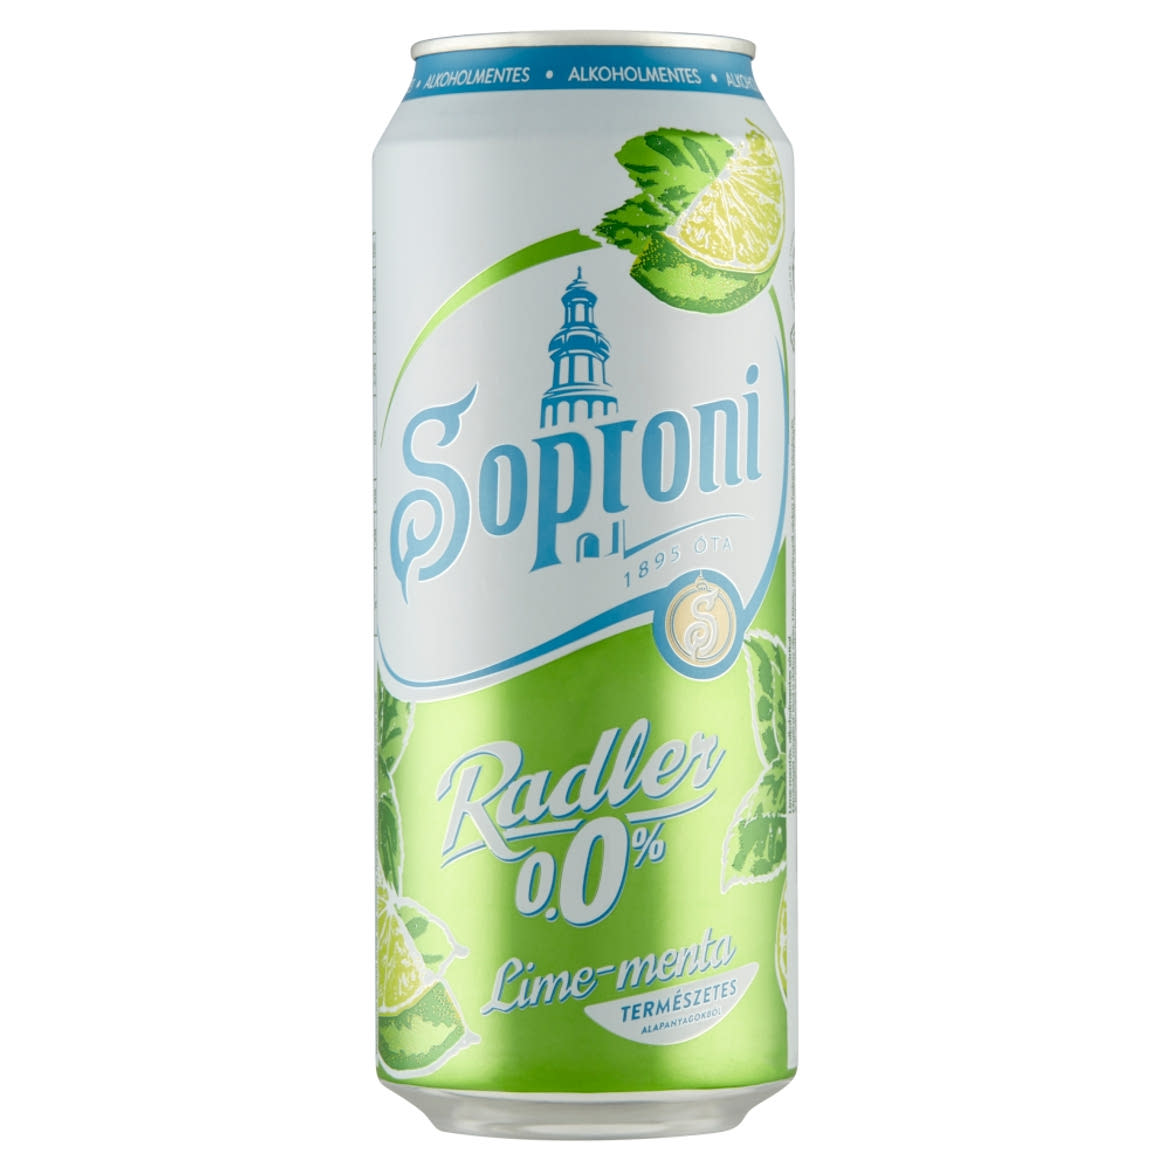 Soproni Radler lime-mentás alkoholmentes sörital